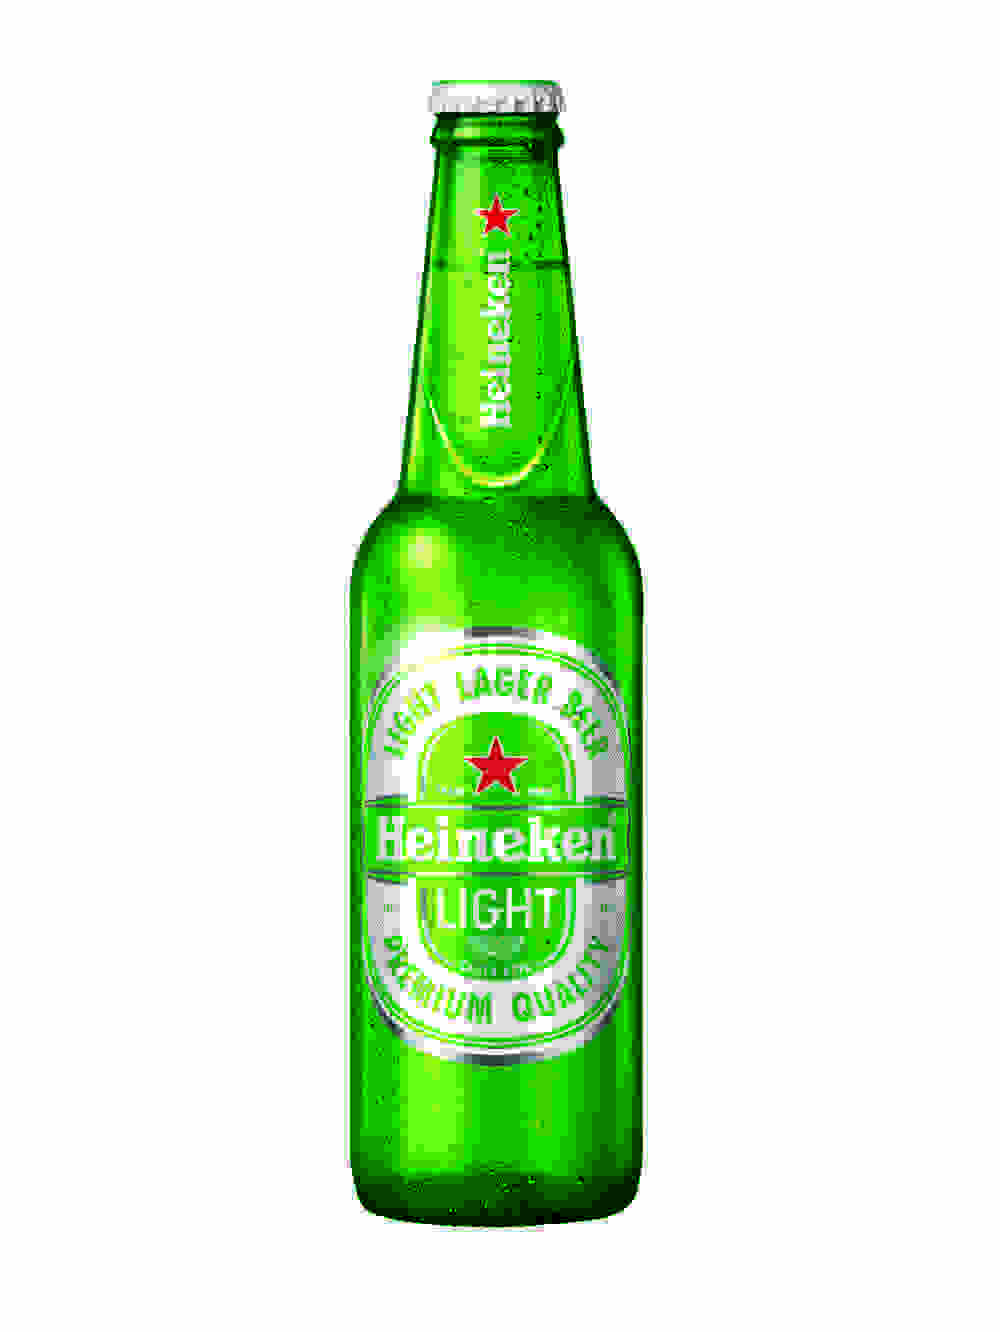 Heineken Ireland has replaced Heineken with Heineken Light as partner of the Irish Tag Rugby Association.